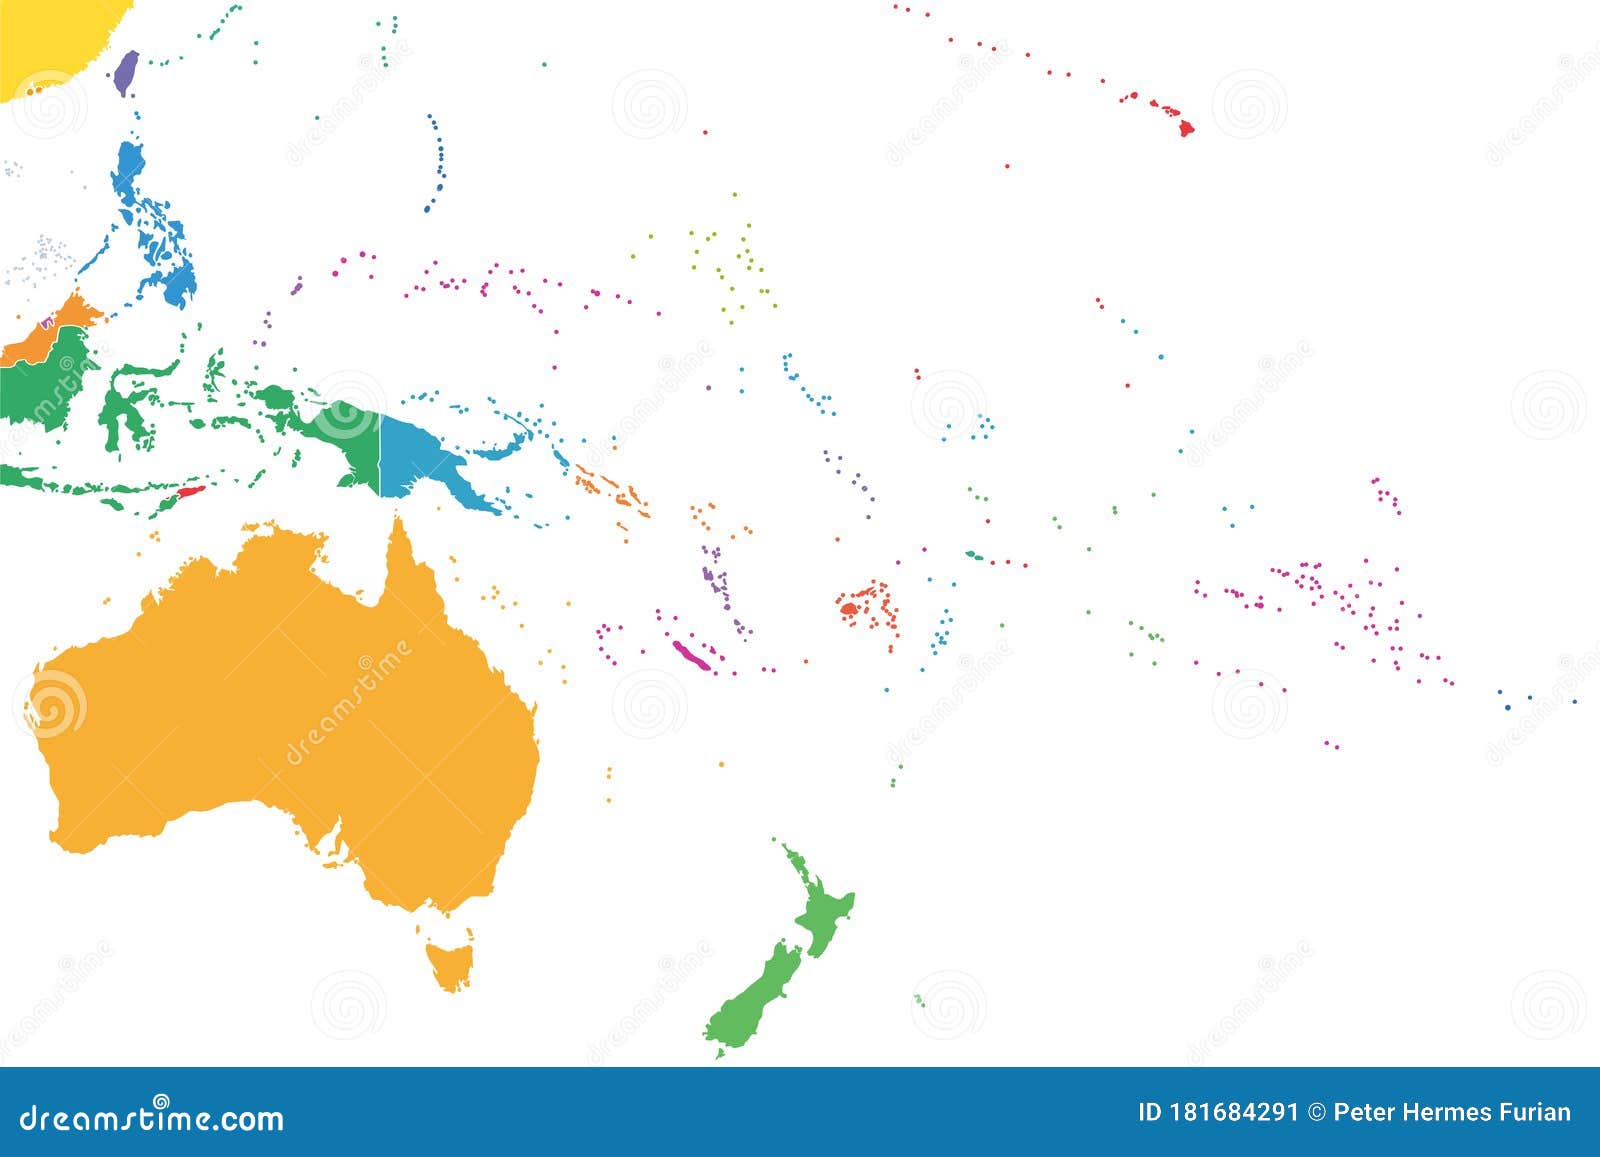 oceania, colored single states, political map